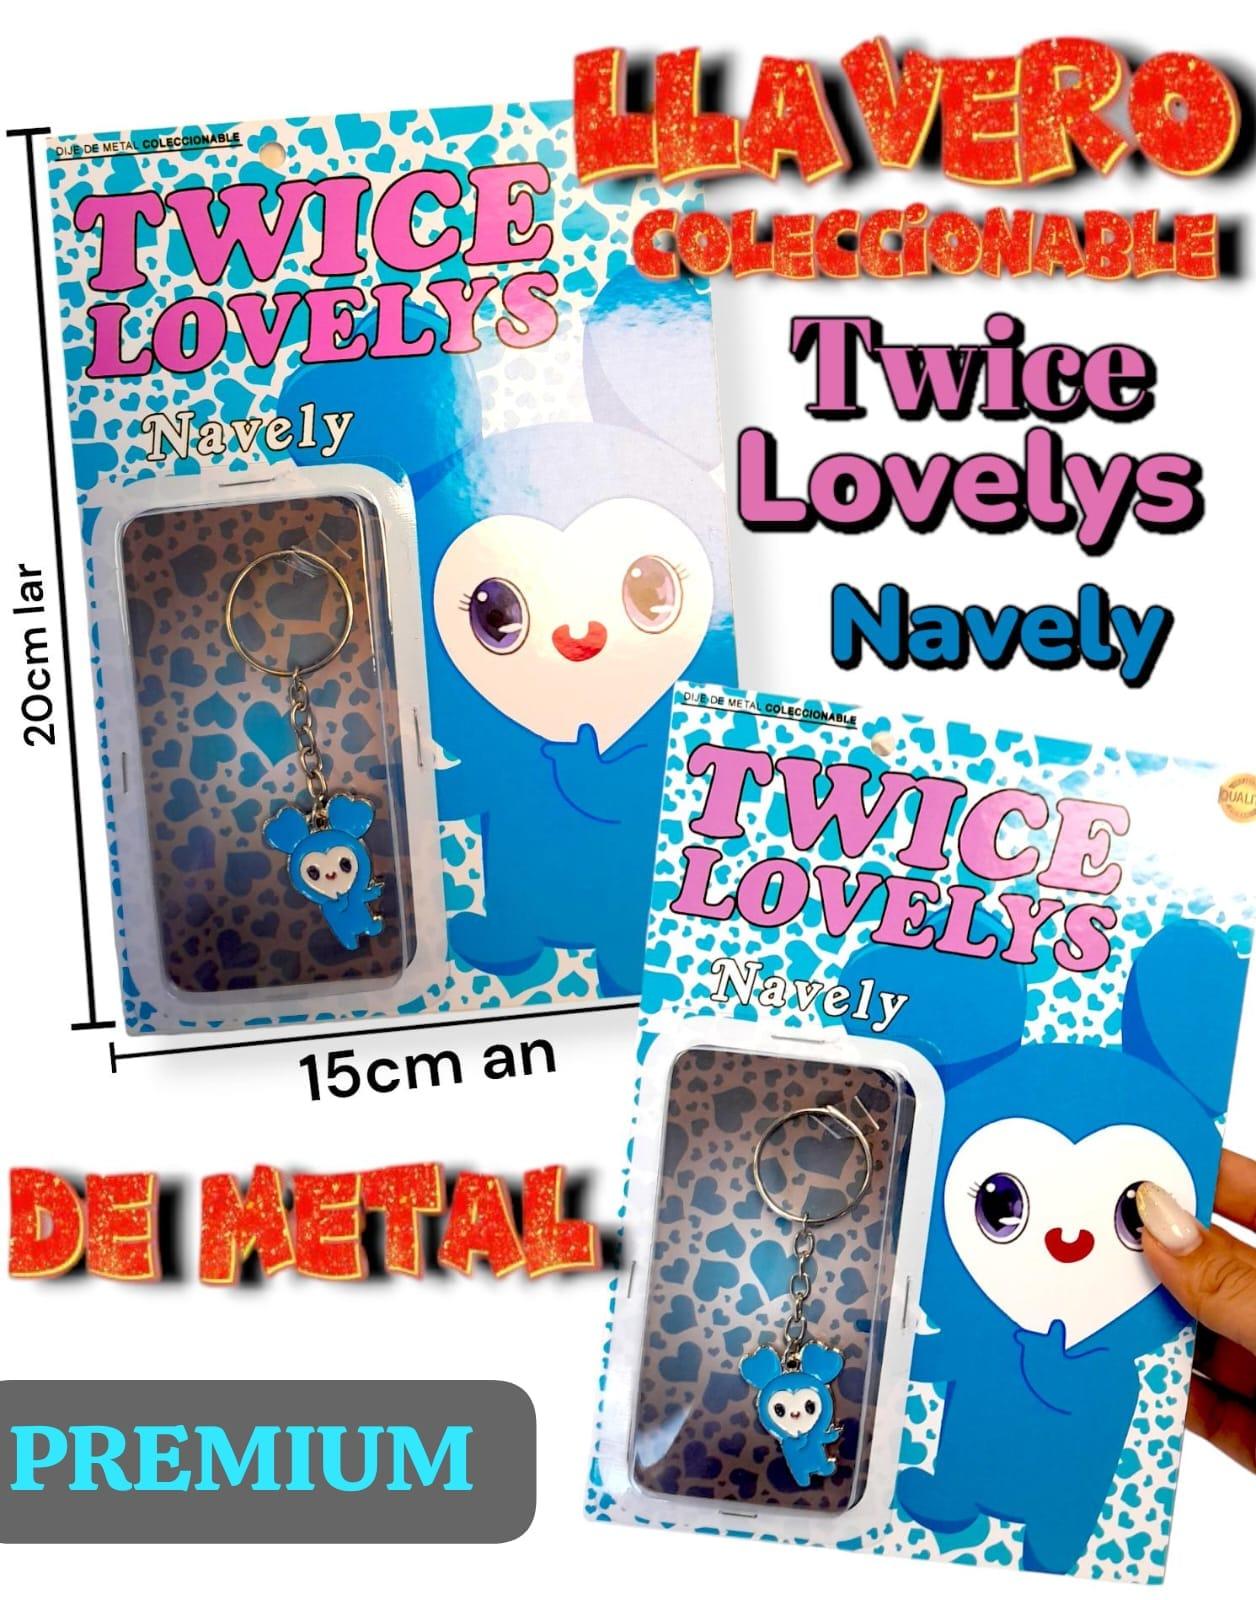 Llavero Premium Coleccionable de Metal  Twice Lovelys (NAVELY)